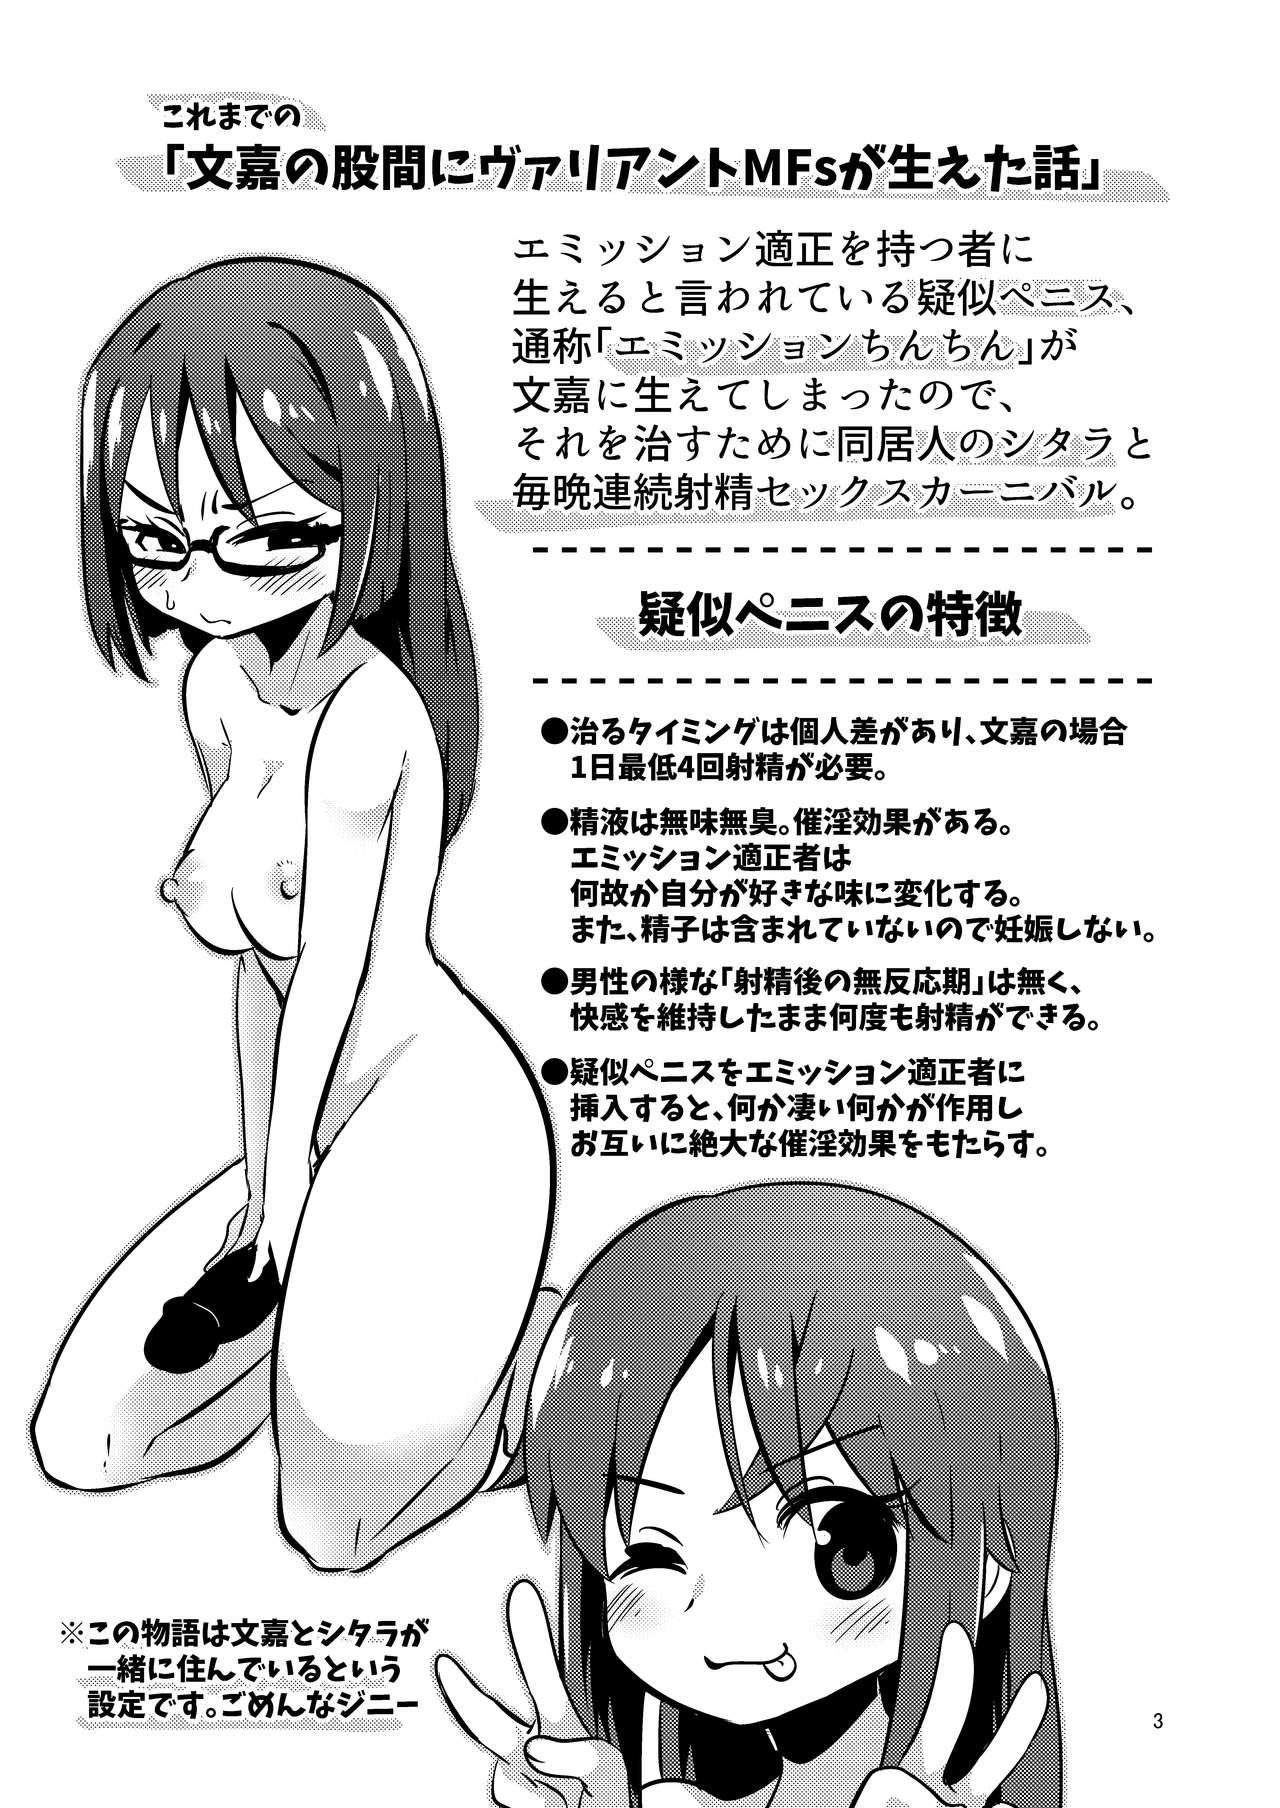 Rubbing Fumika no Kokan ni Variant MFs ga Haeta Hanashi 3 Kannin Hen - Alice gear aegis Camsex - Page 3